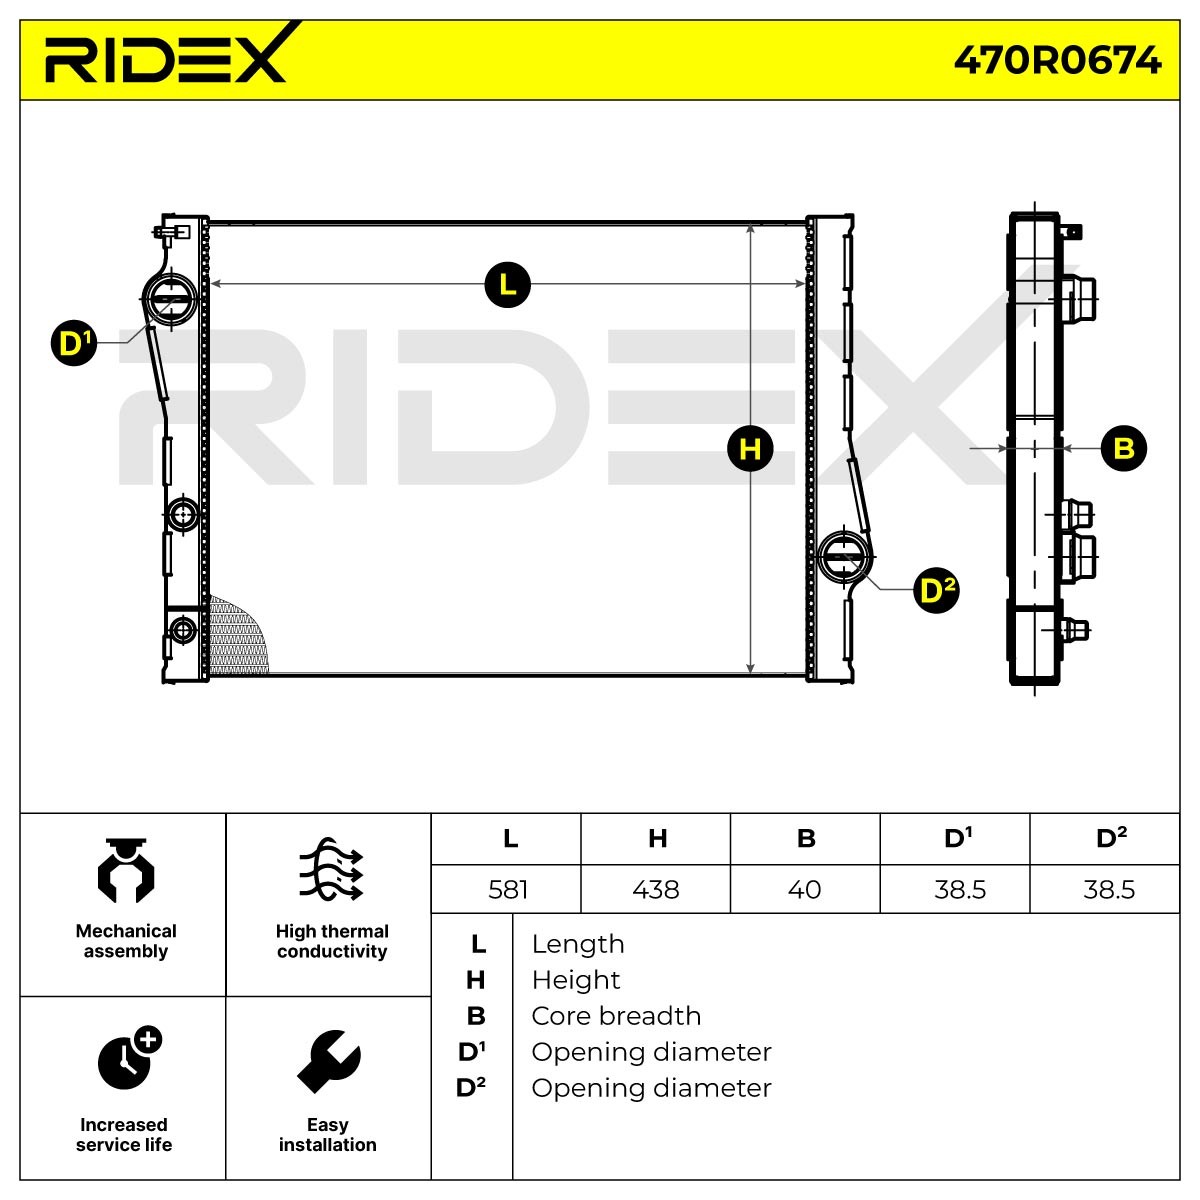 Engine radiator 470R0674 from RIDEX